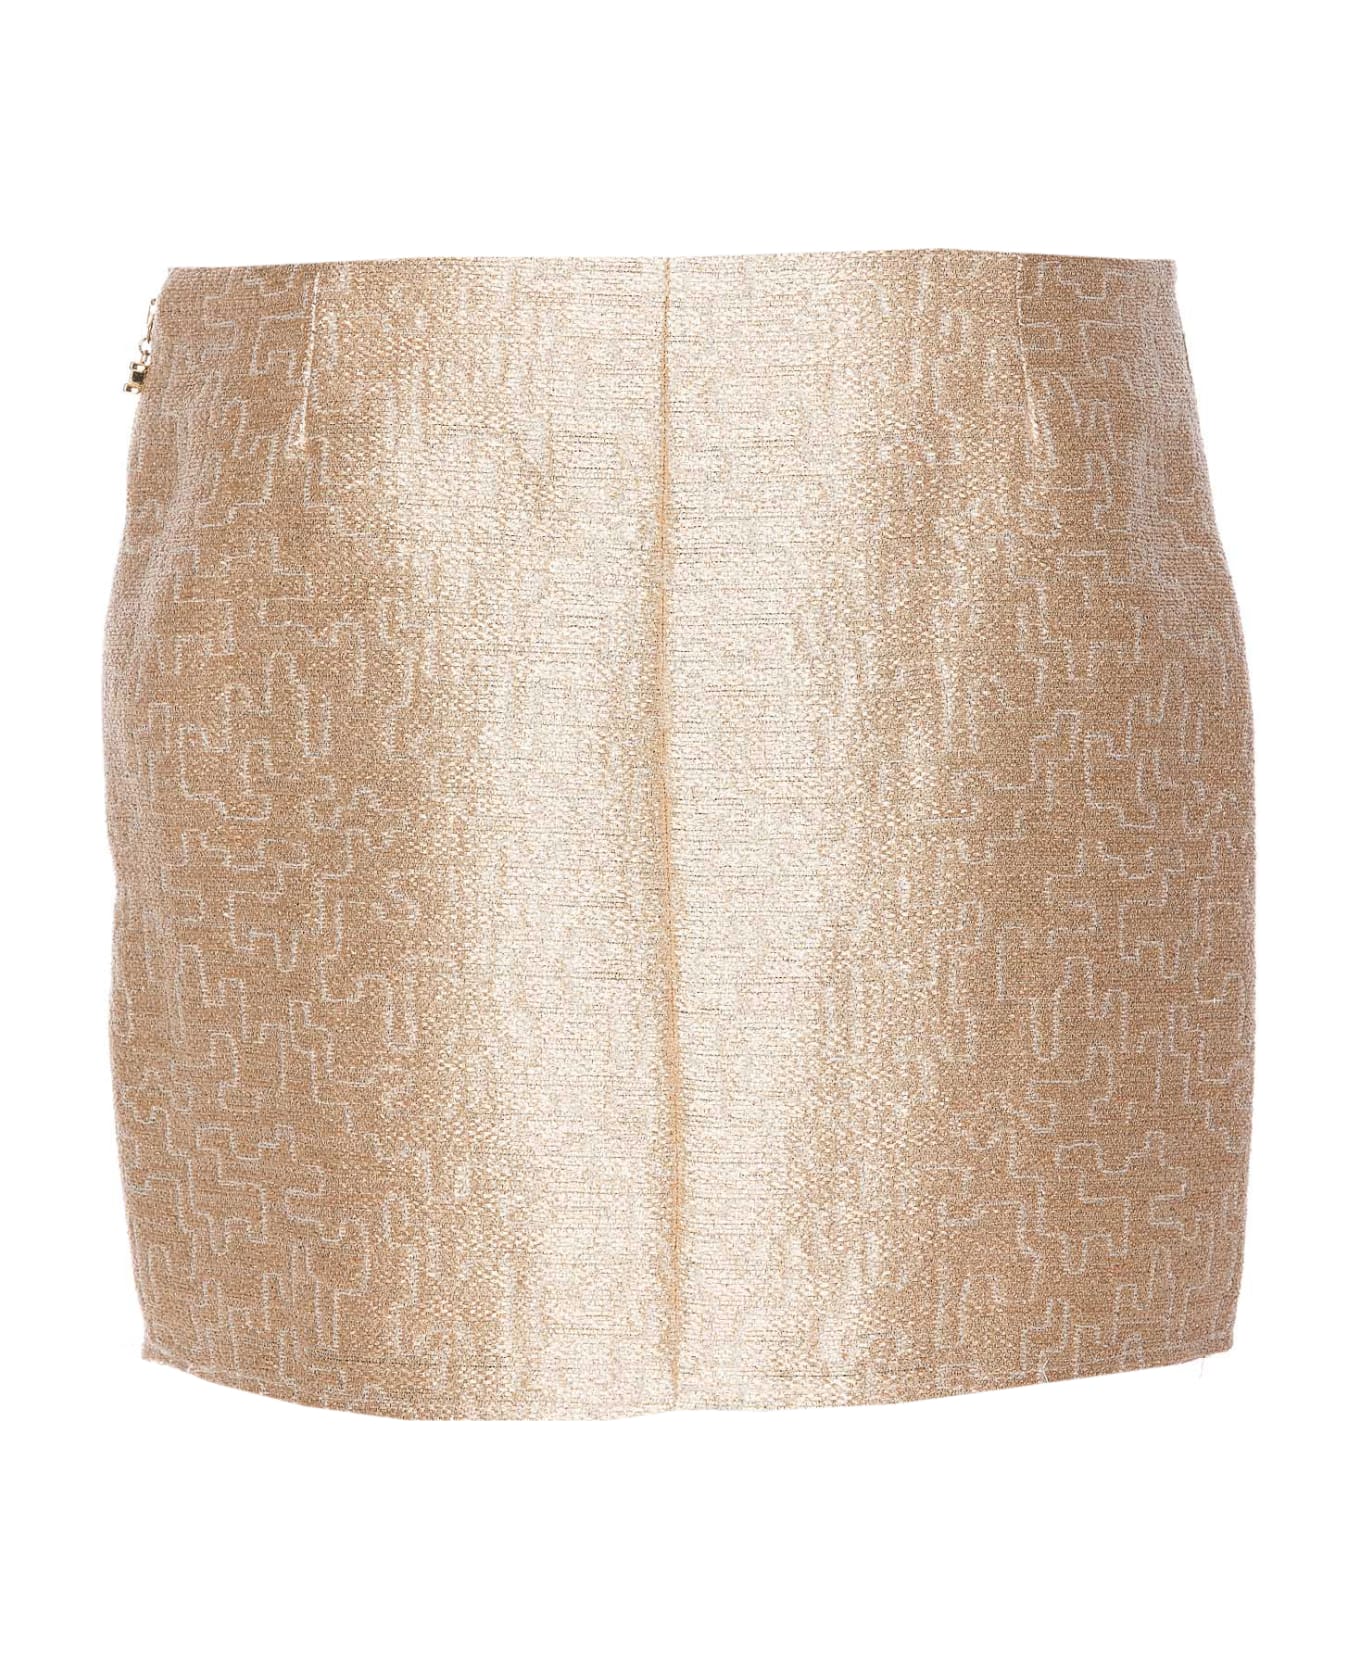 Elisabetta Franchi Mini Skirt - Golden スカート